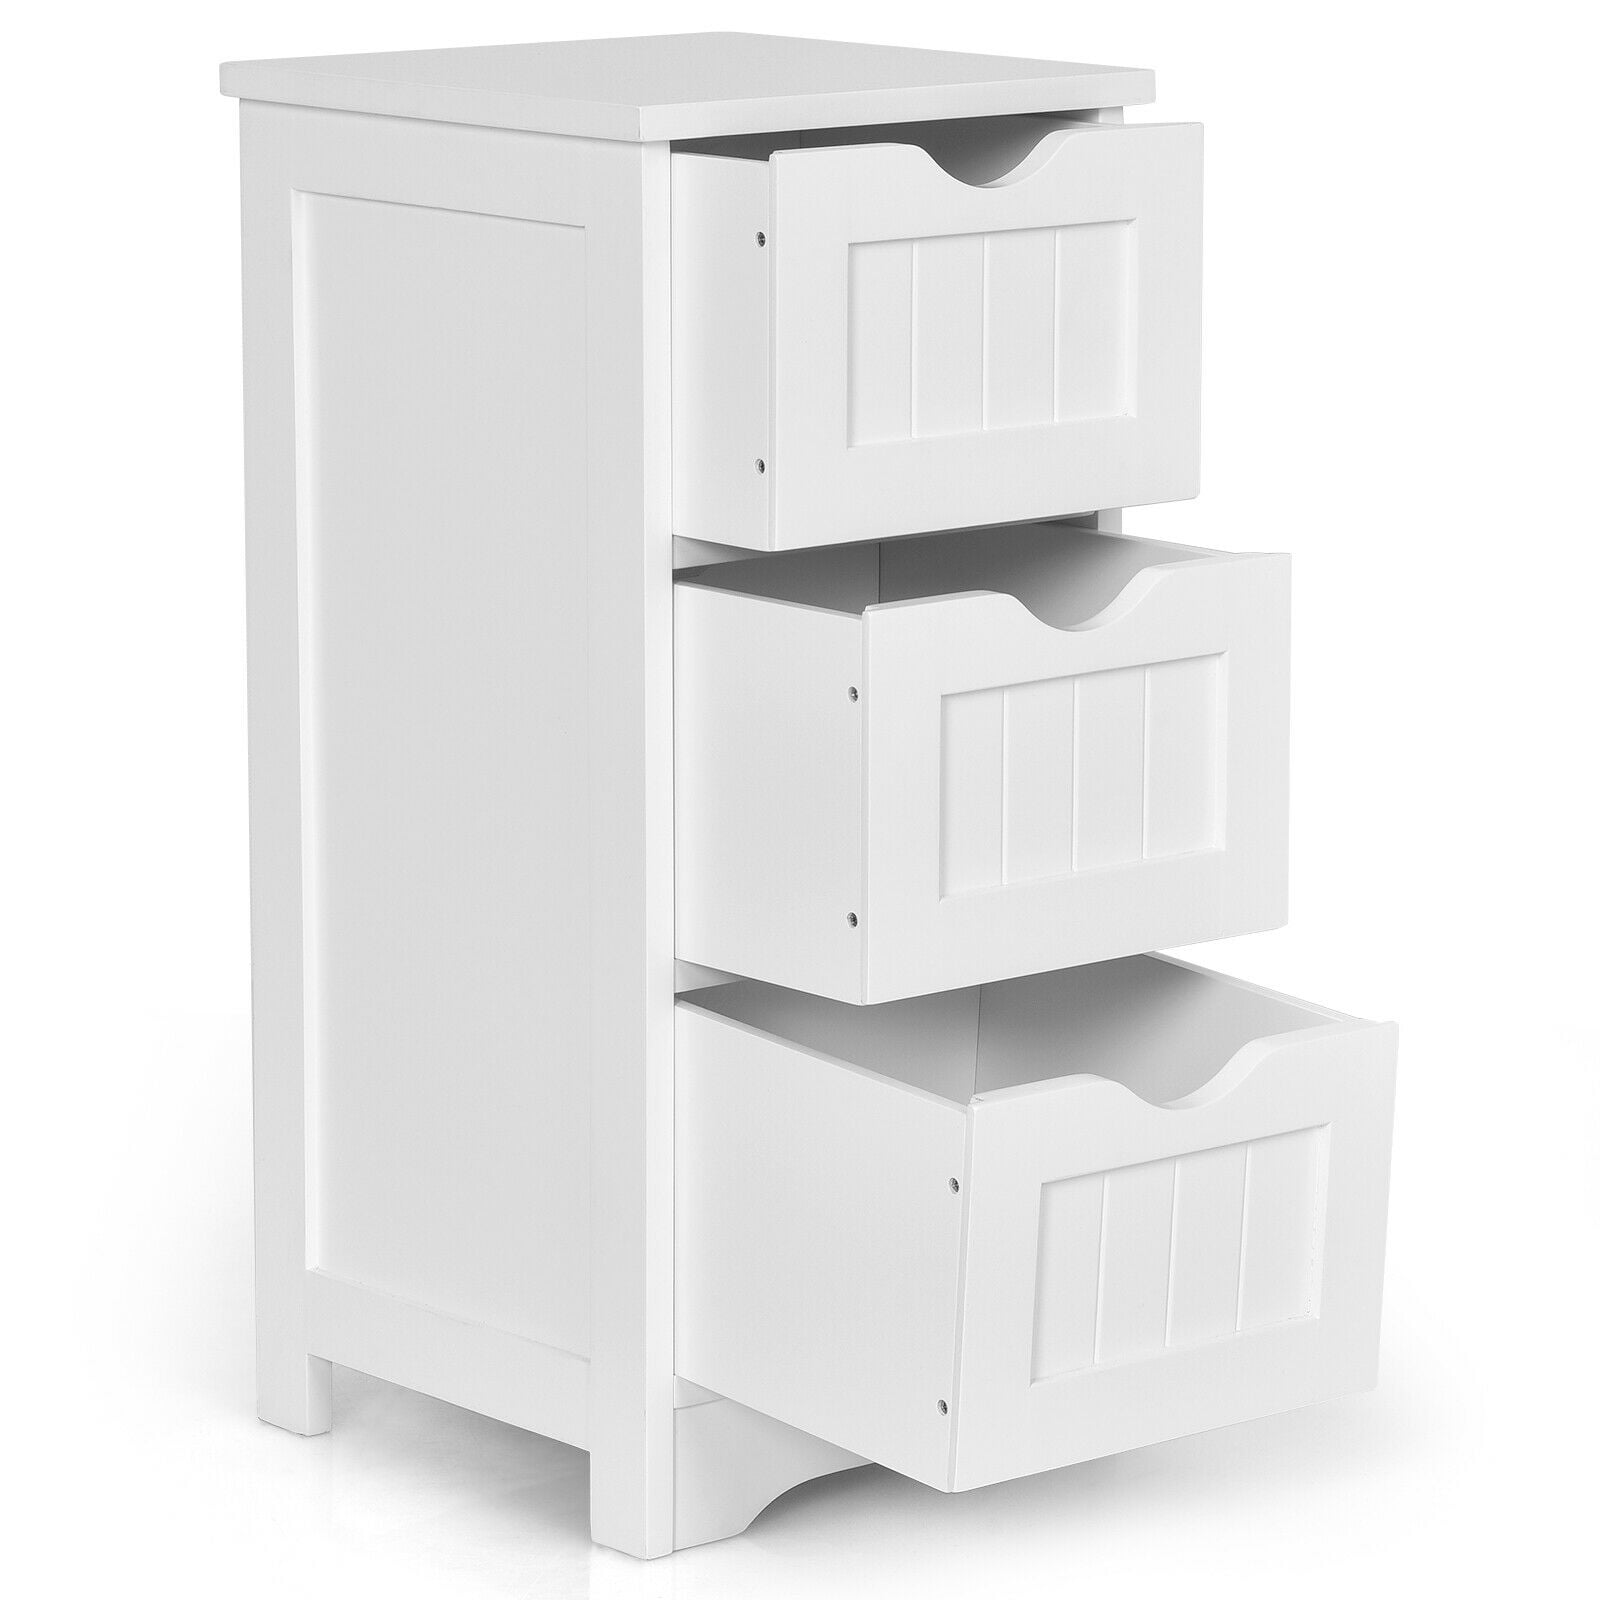 Gymax Bathroom Floor Cabinet Wooden, Bathroom Wooden Free Standing Storage Side Floor Cabinet Organizer